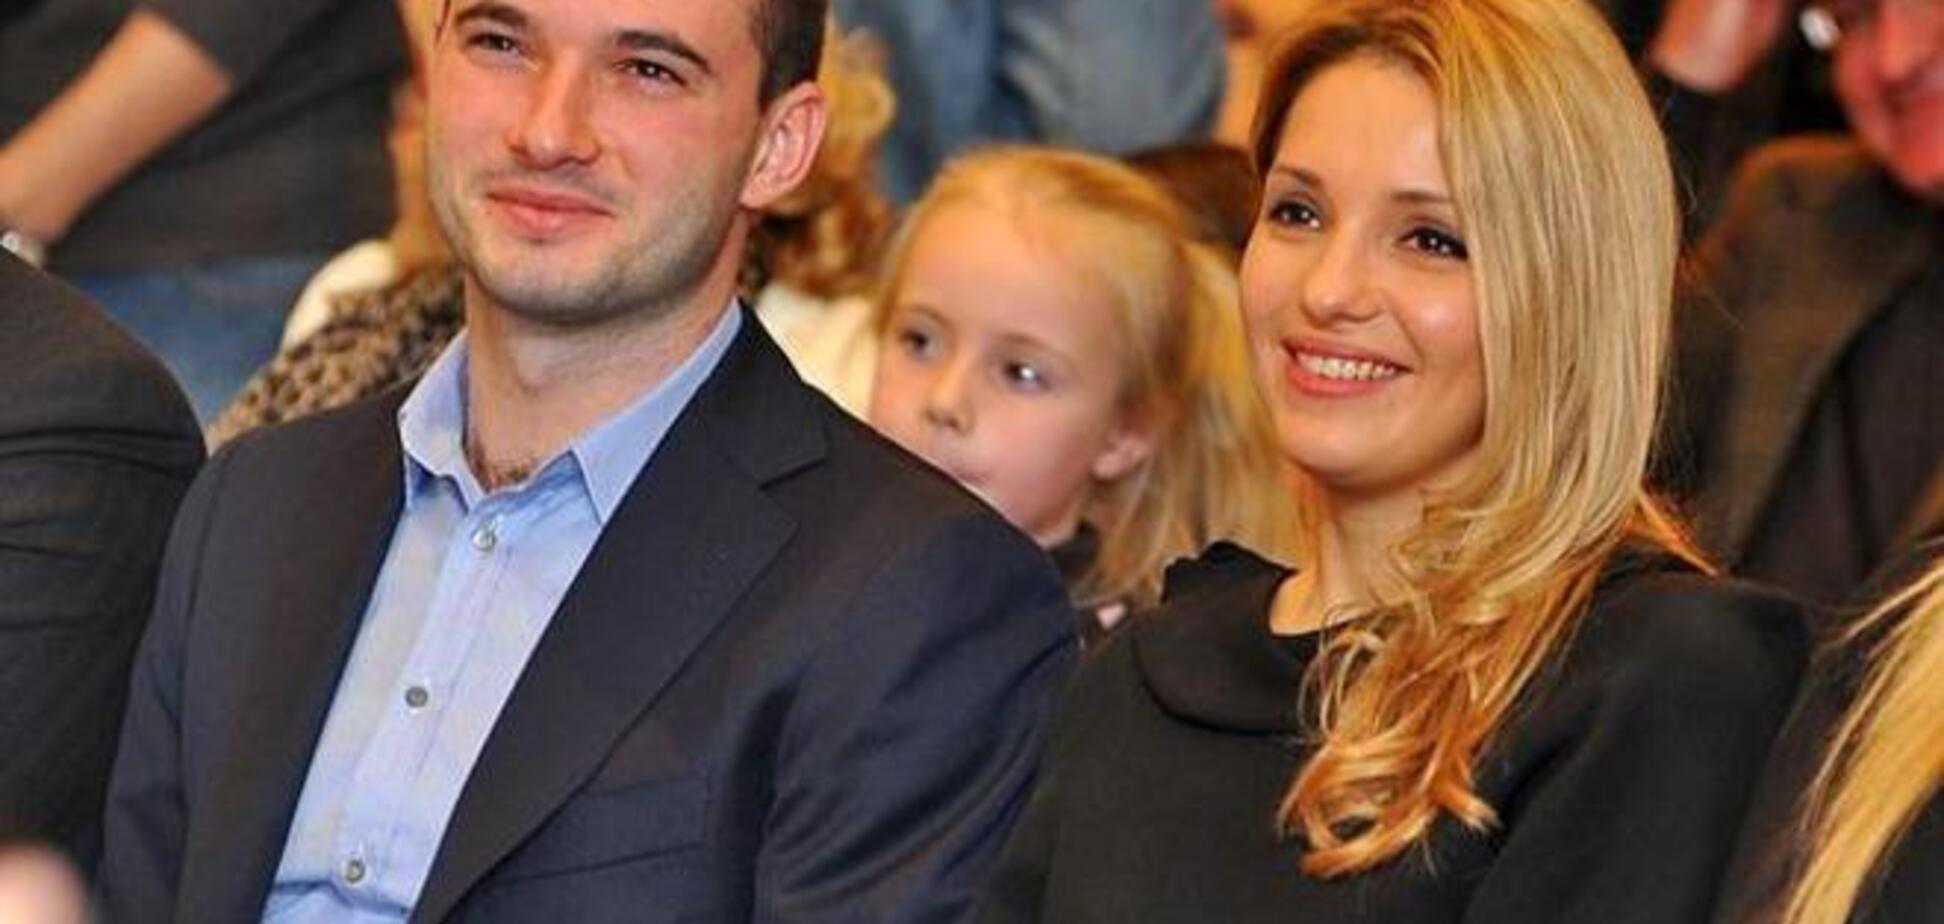 Бойфренд дочери Тимошенко занялся развитием бизнеса в Крыму - СМИ